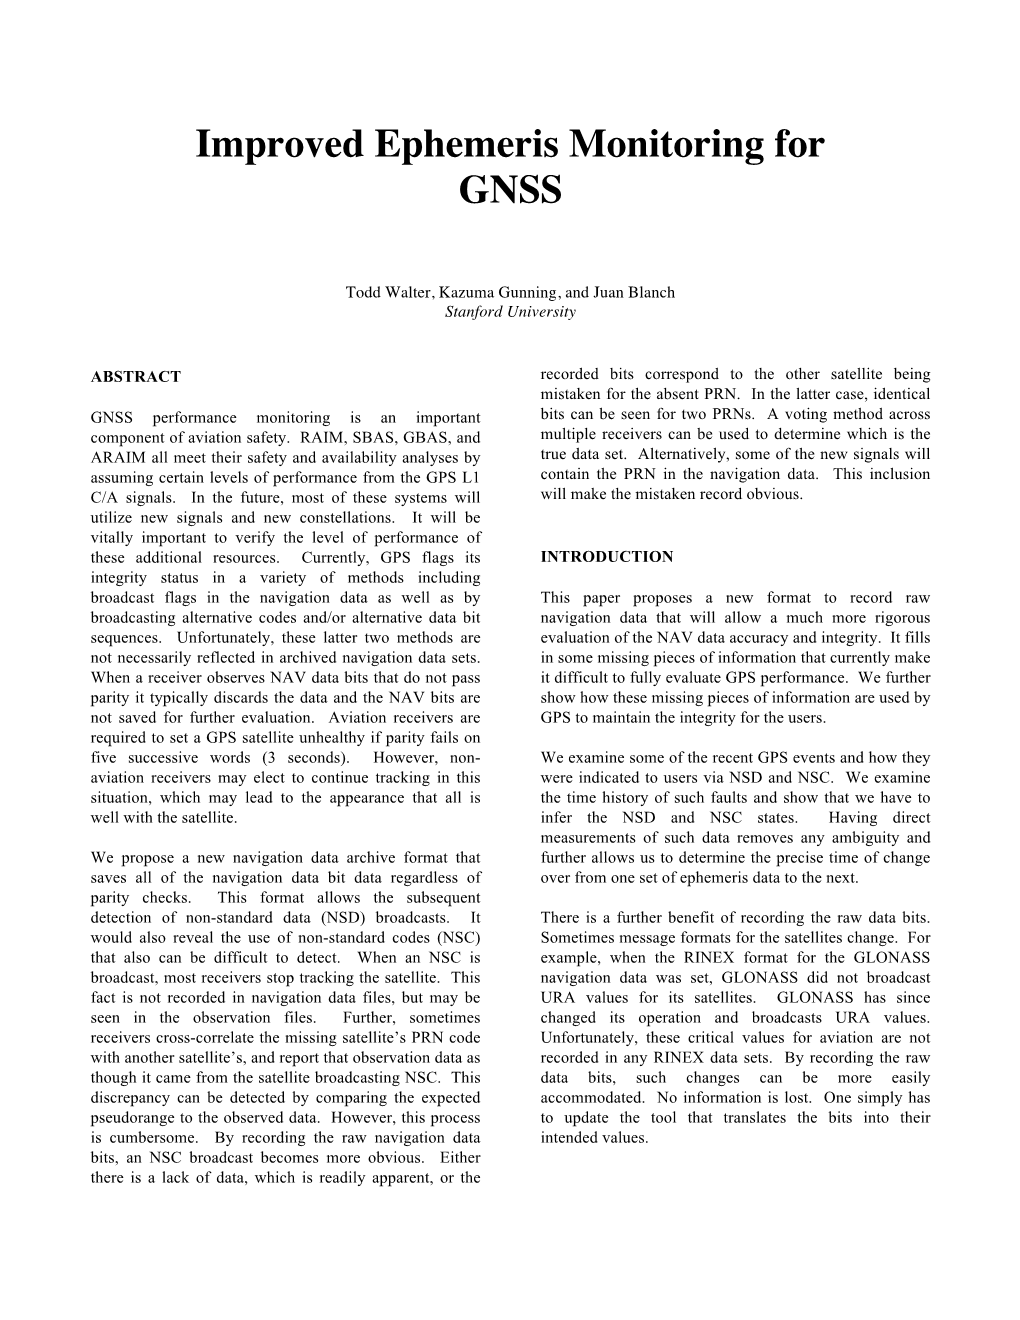 Improved Ephemeris Monitoring for GNSS